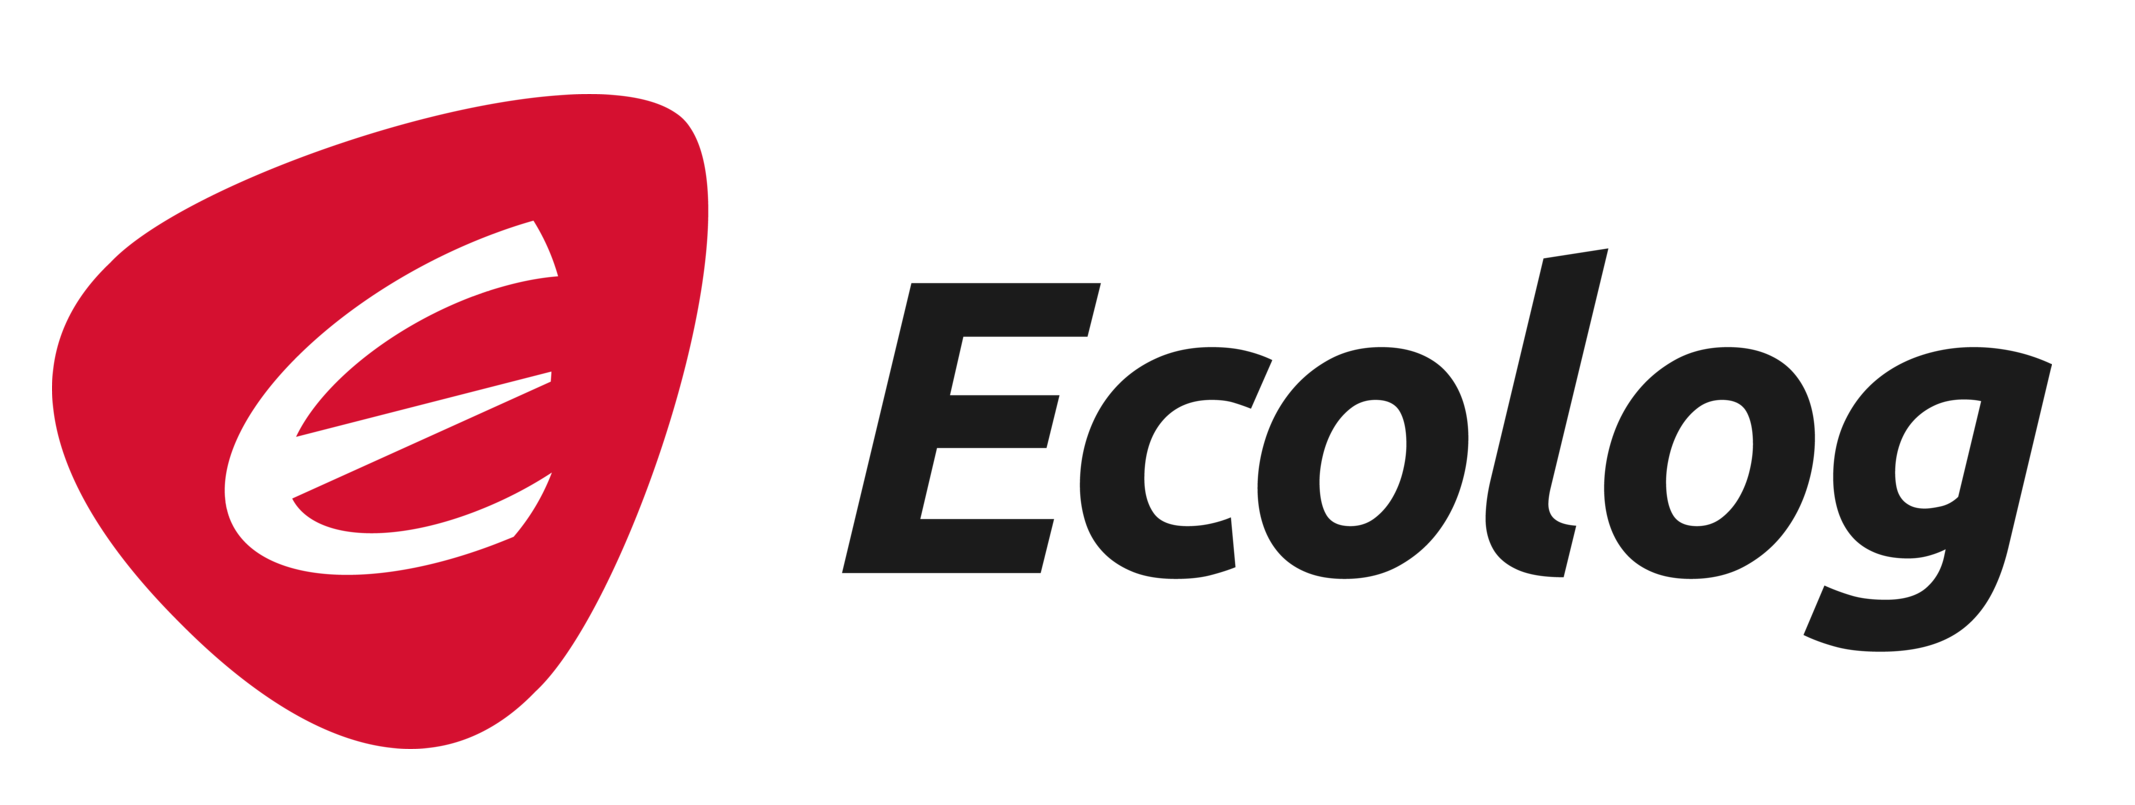 Ecolog International FZE